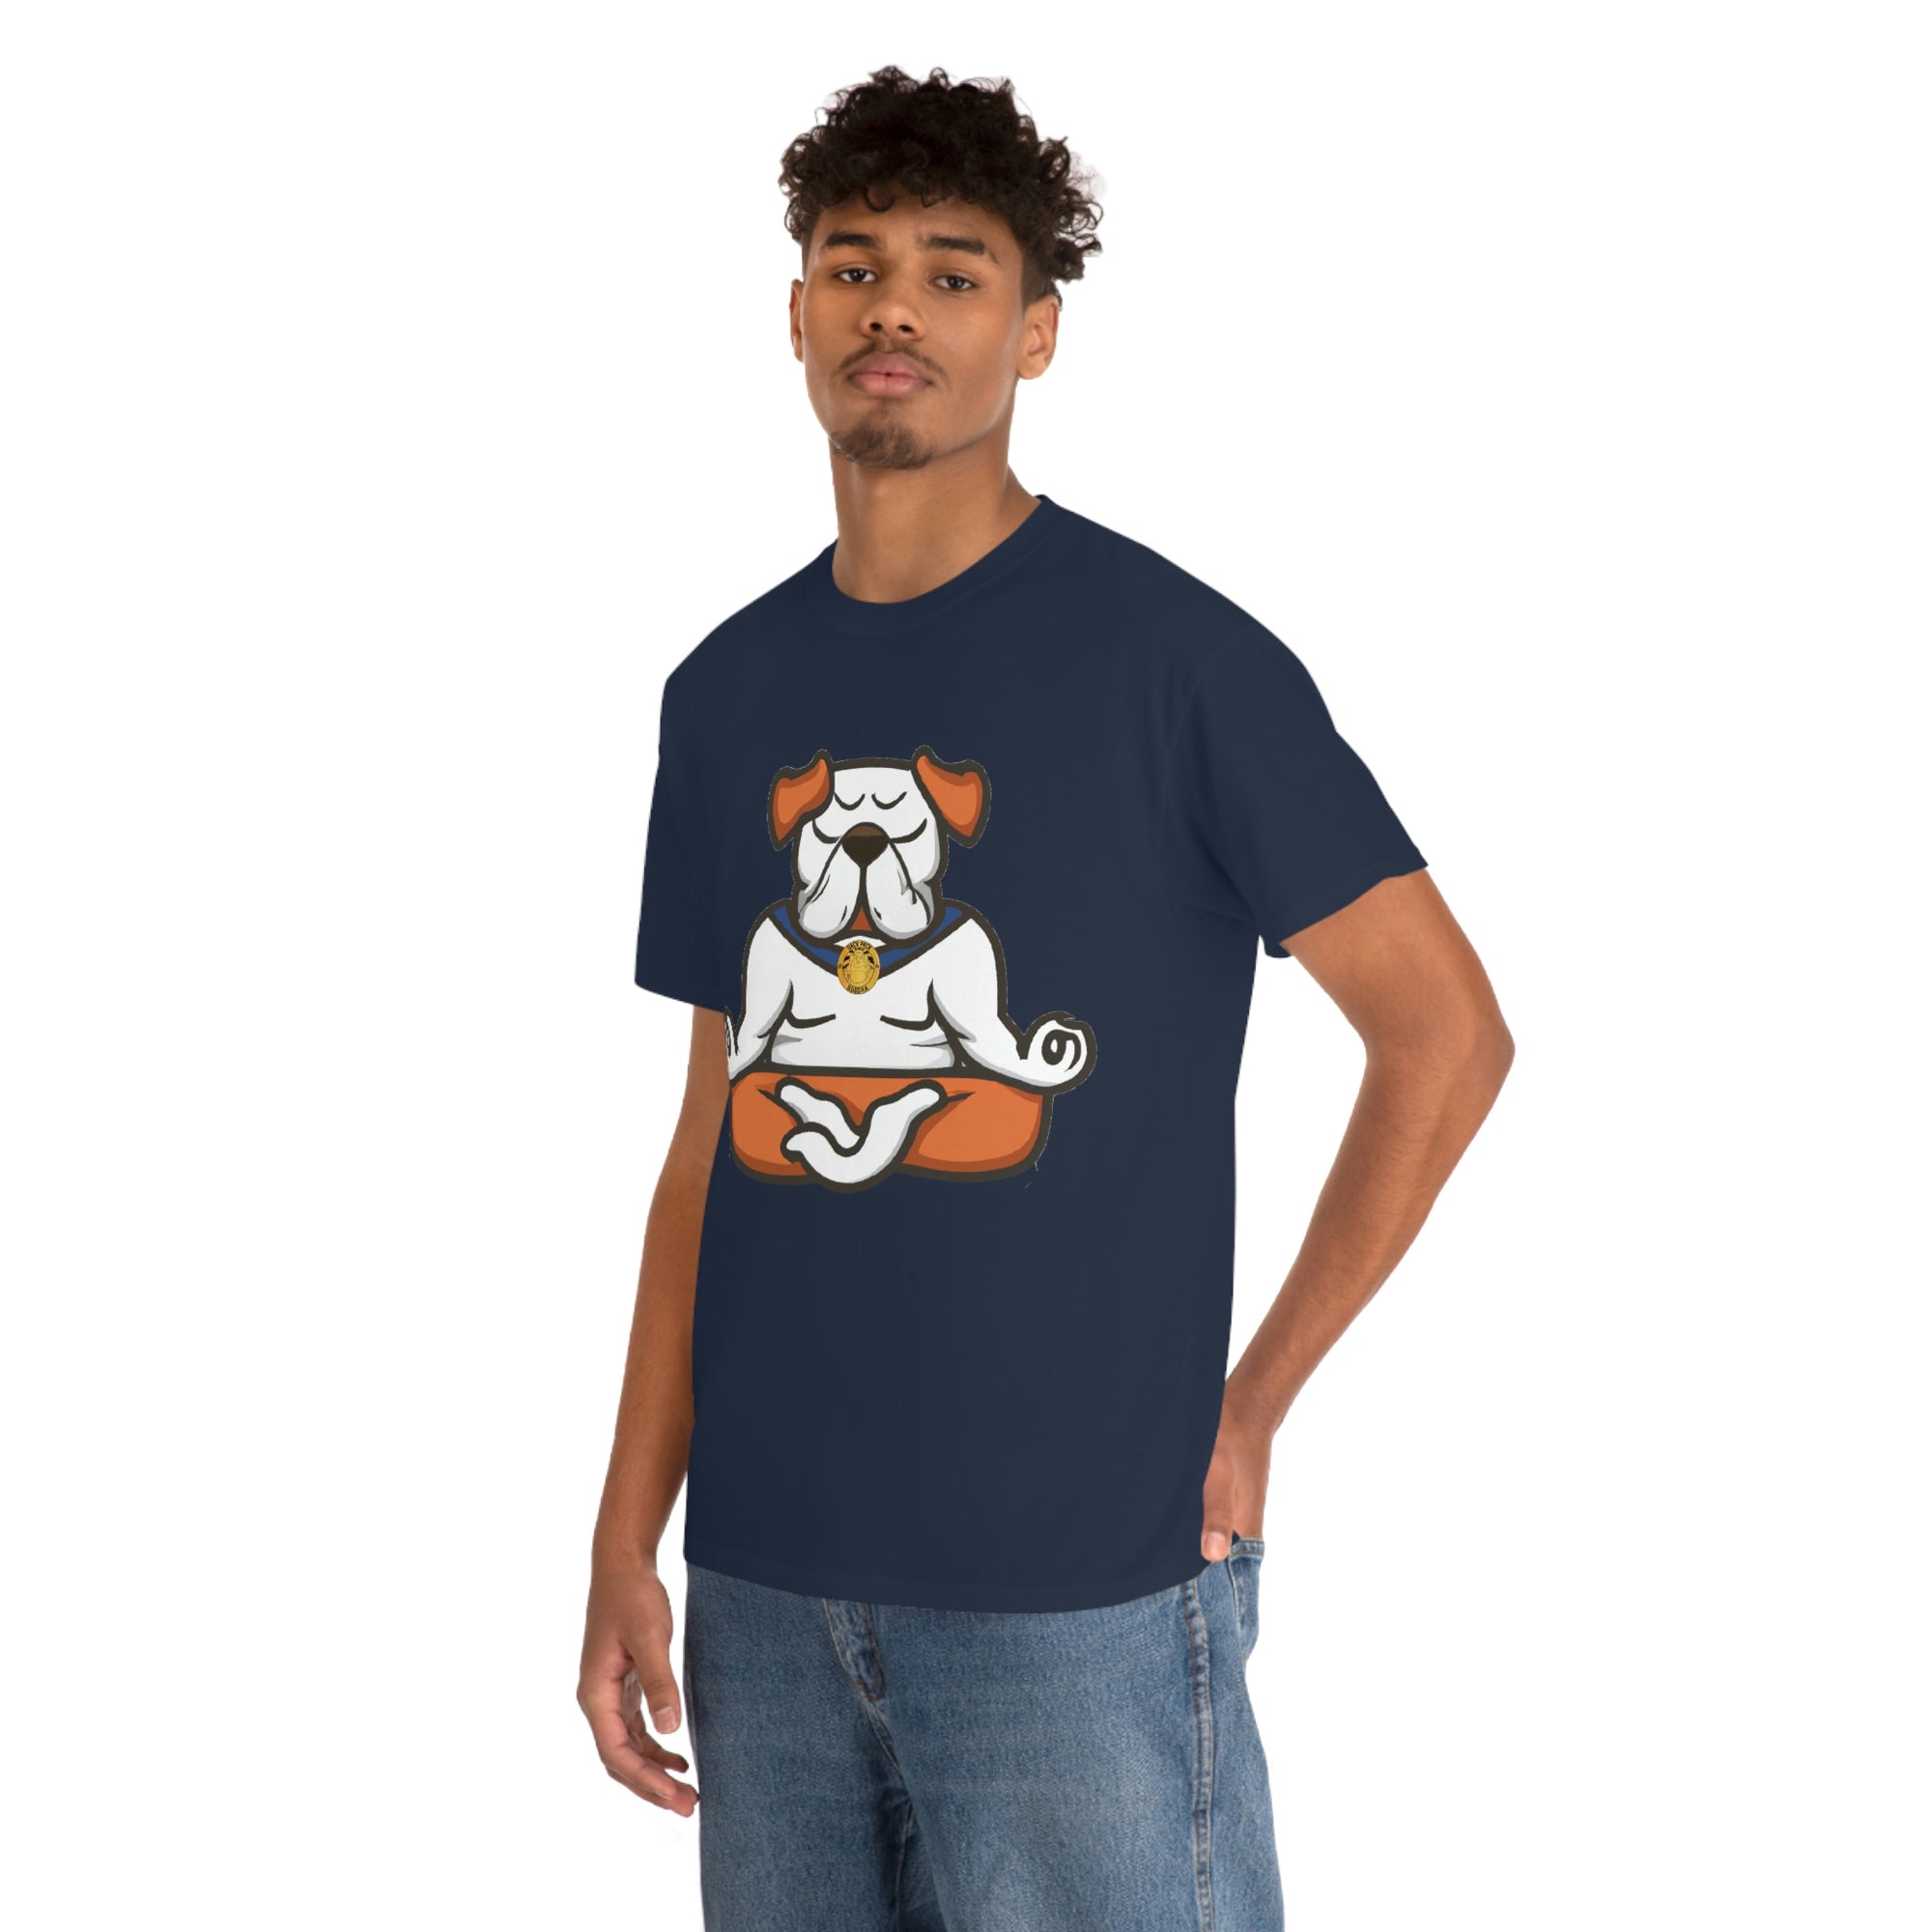 Zen Dog #2 - Unisex T-shirt